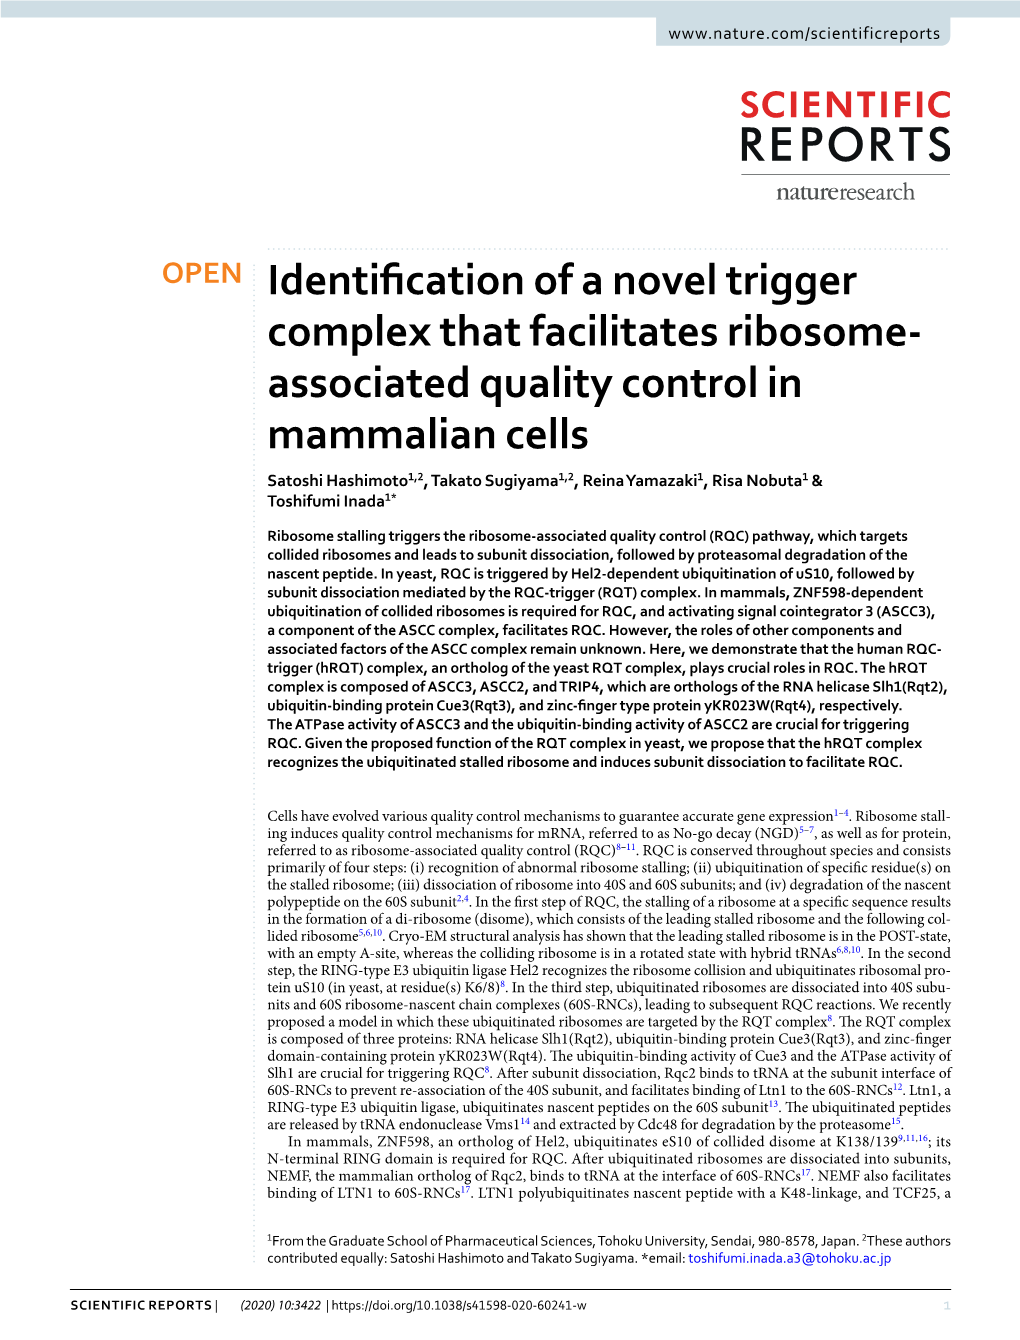 Identification of a Novel Trigger Complex That Facilitates Ribosome